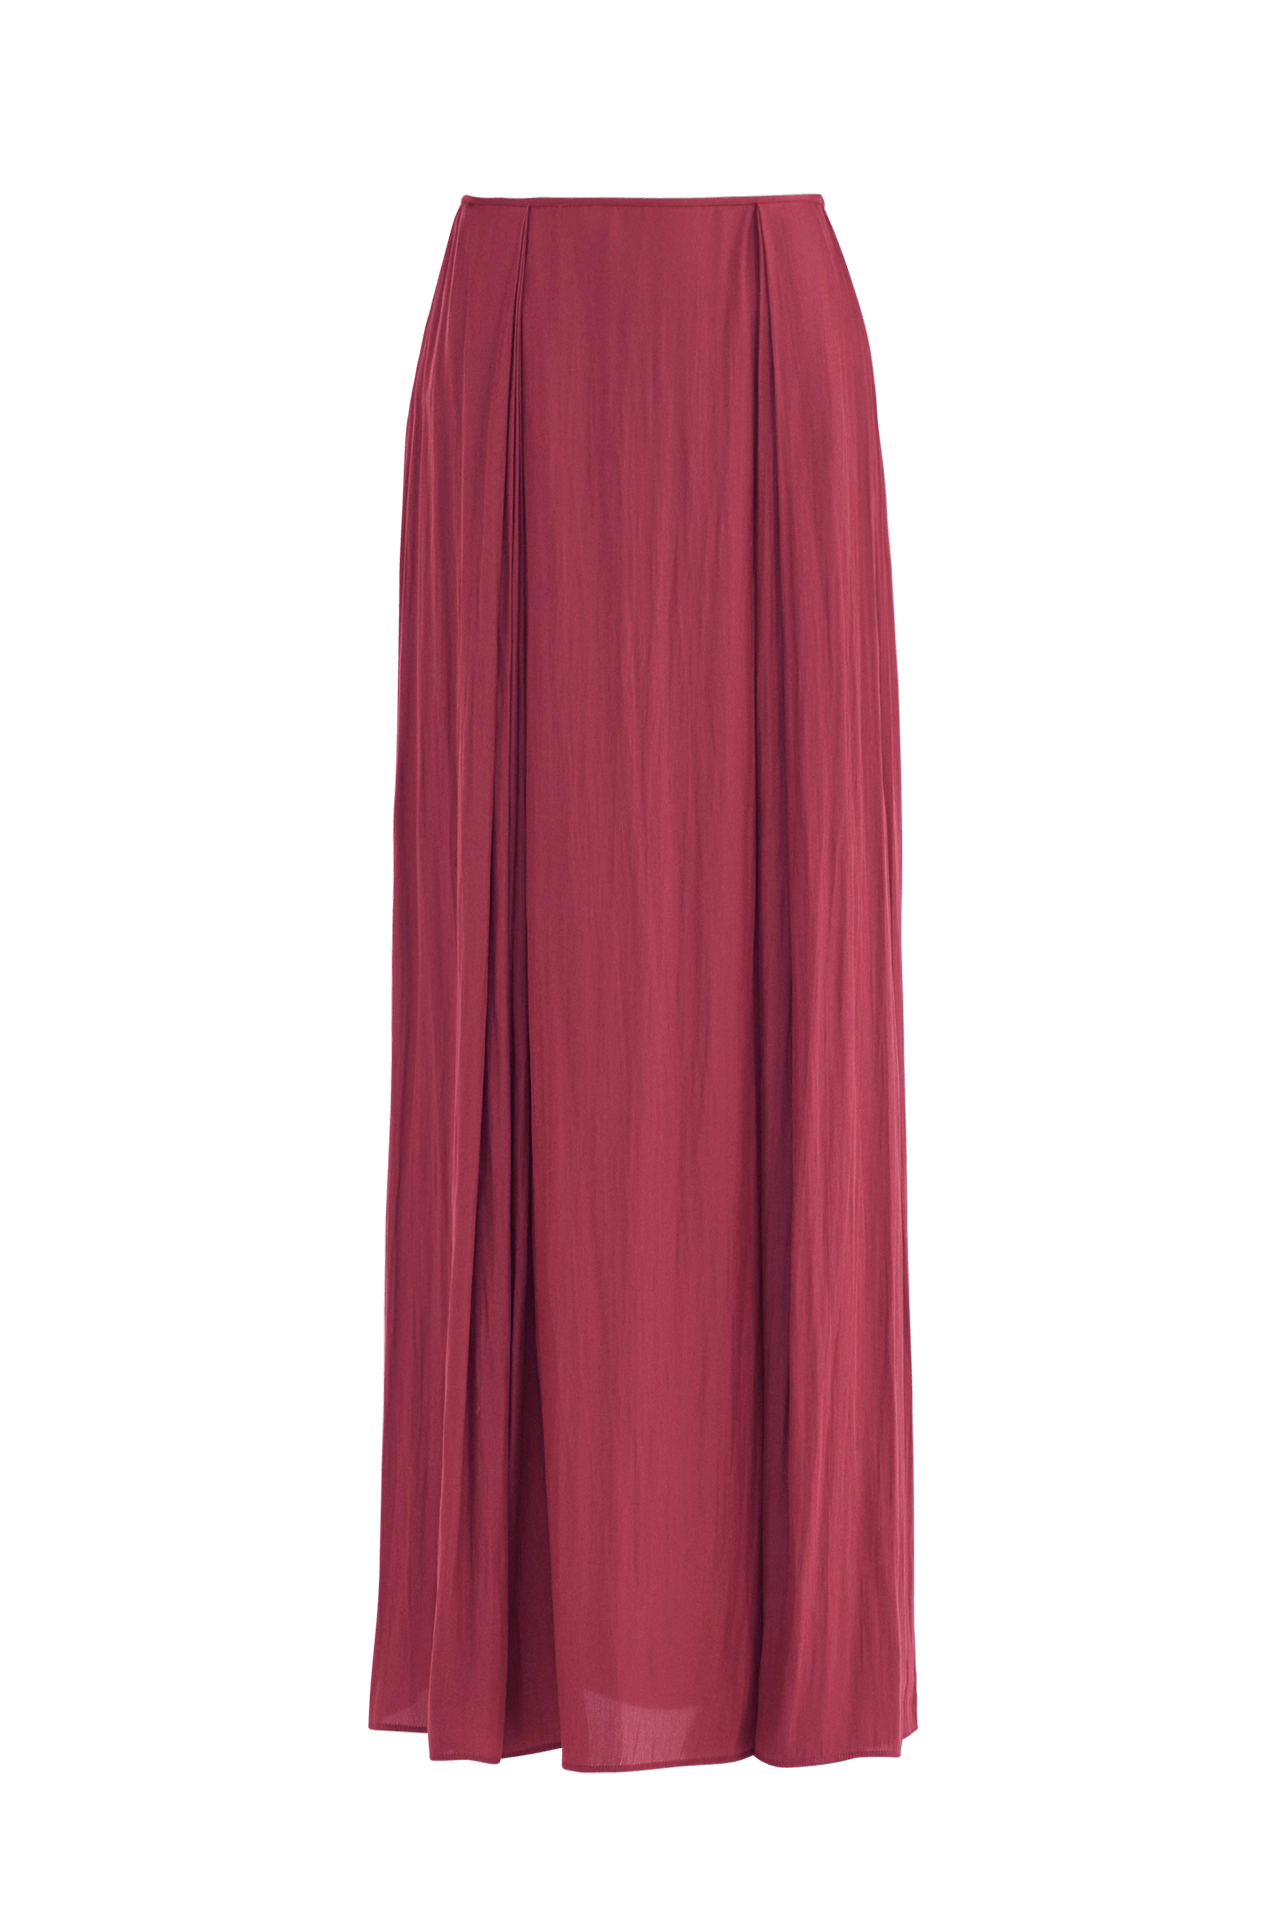 Silhouette Skirt Rapsberry